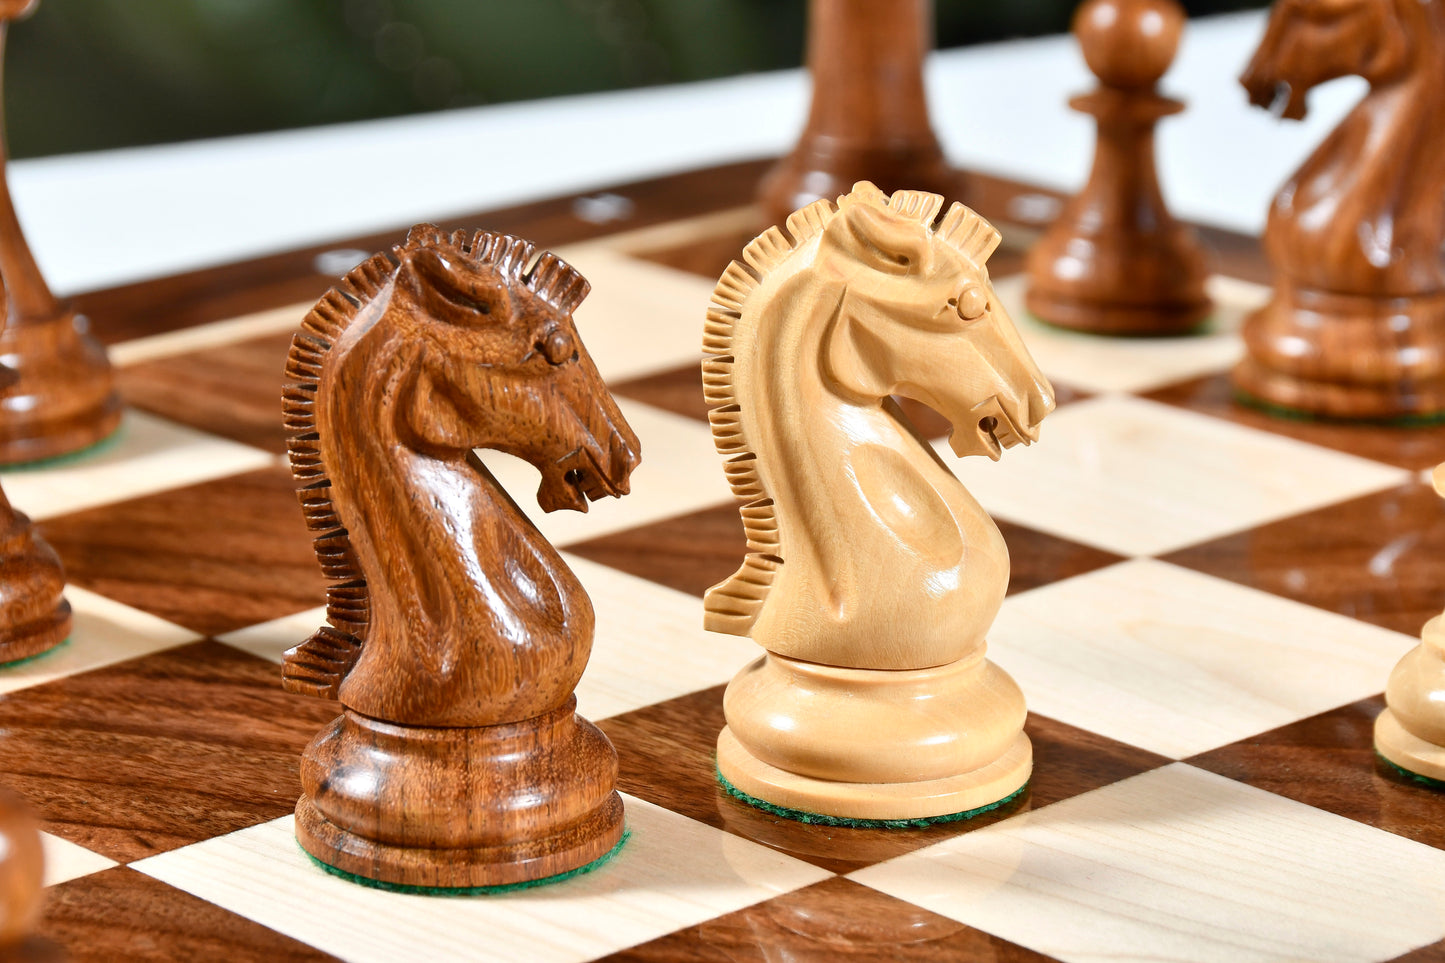 The Craftsman Knight Staunton Chess Pieces in Sheesham Wood & Boxwood - 3.9" King